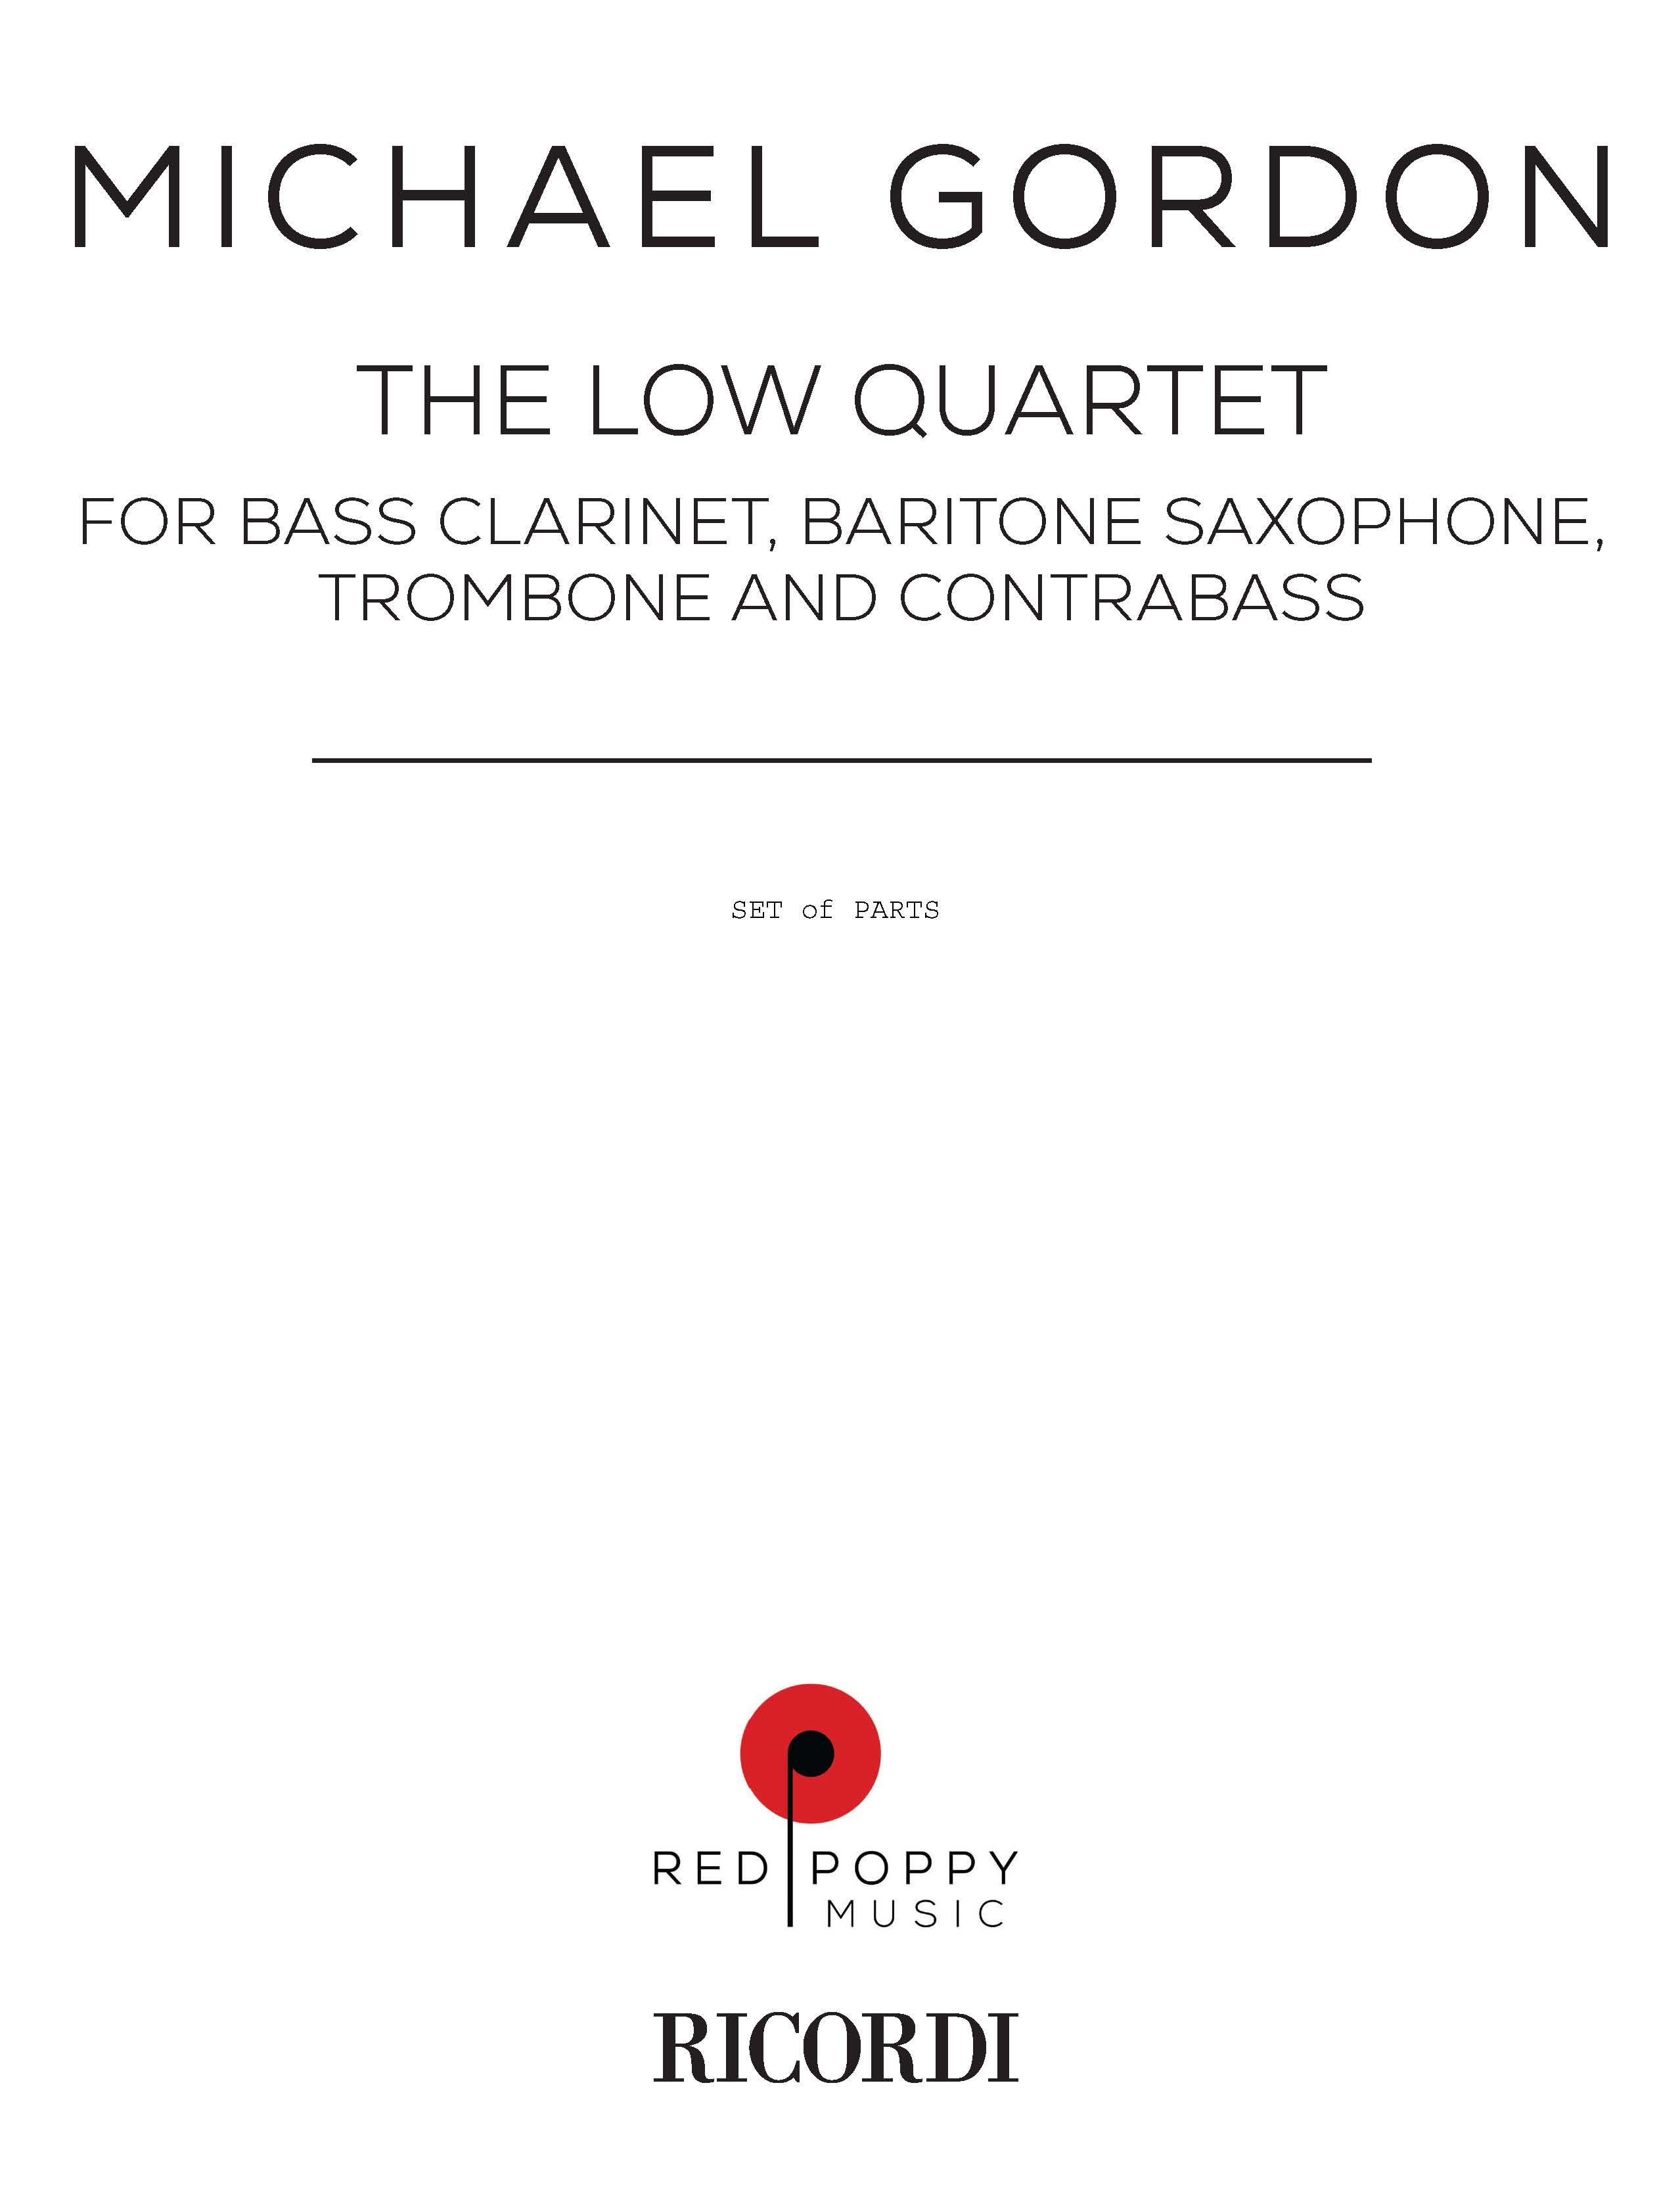 Low quartet, The for Bass Clarinet, Baritone Saxophone, Trombone & Contrabass